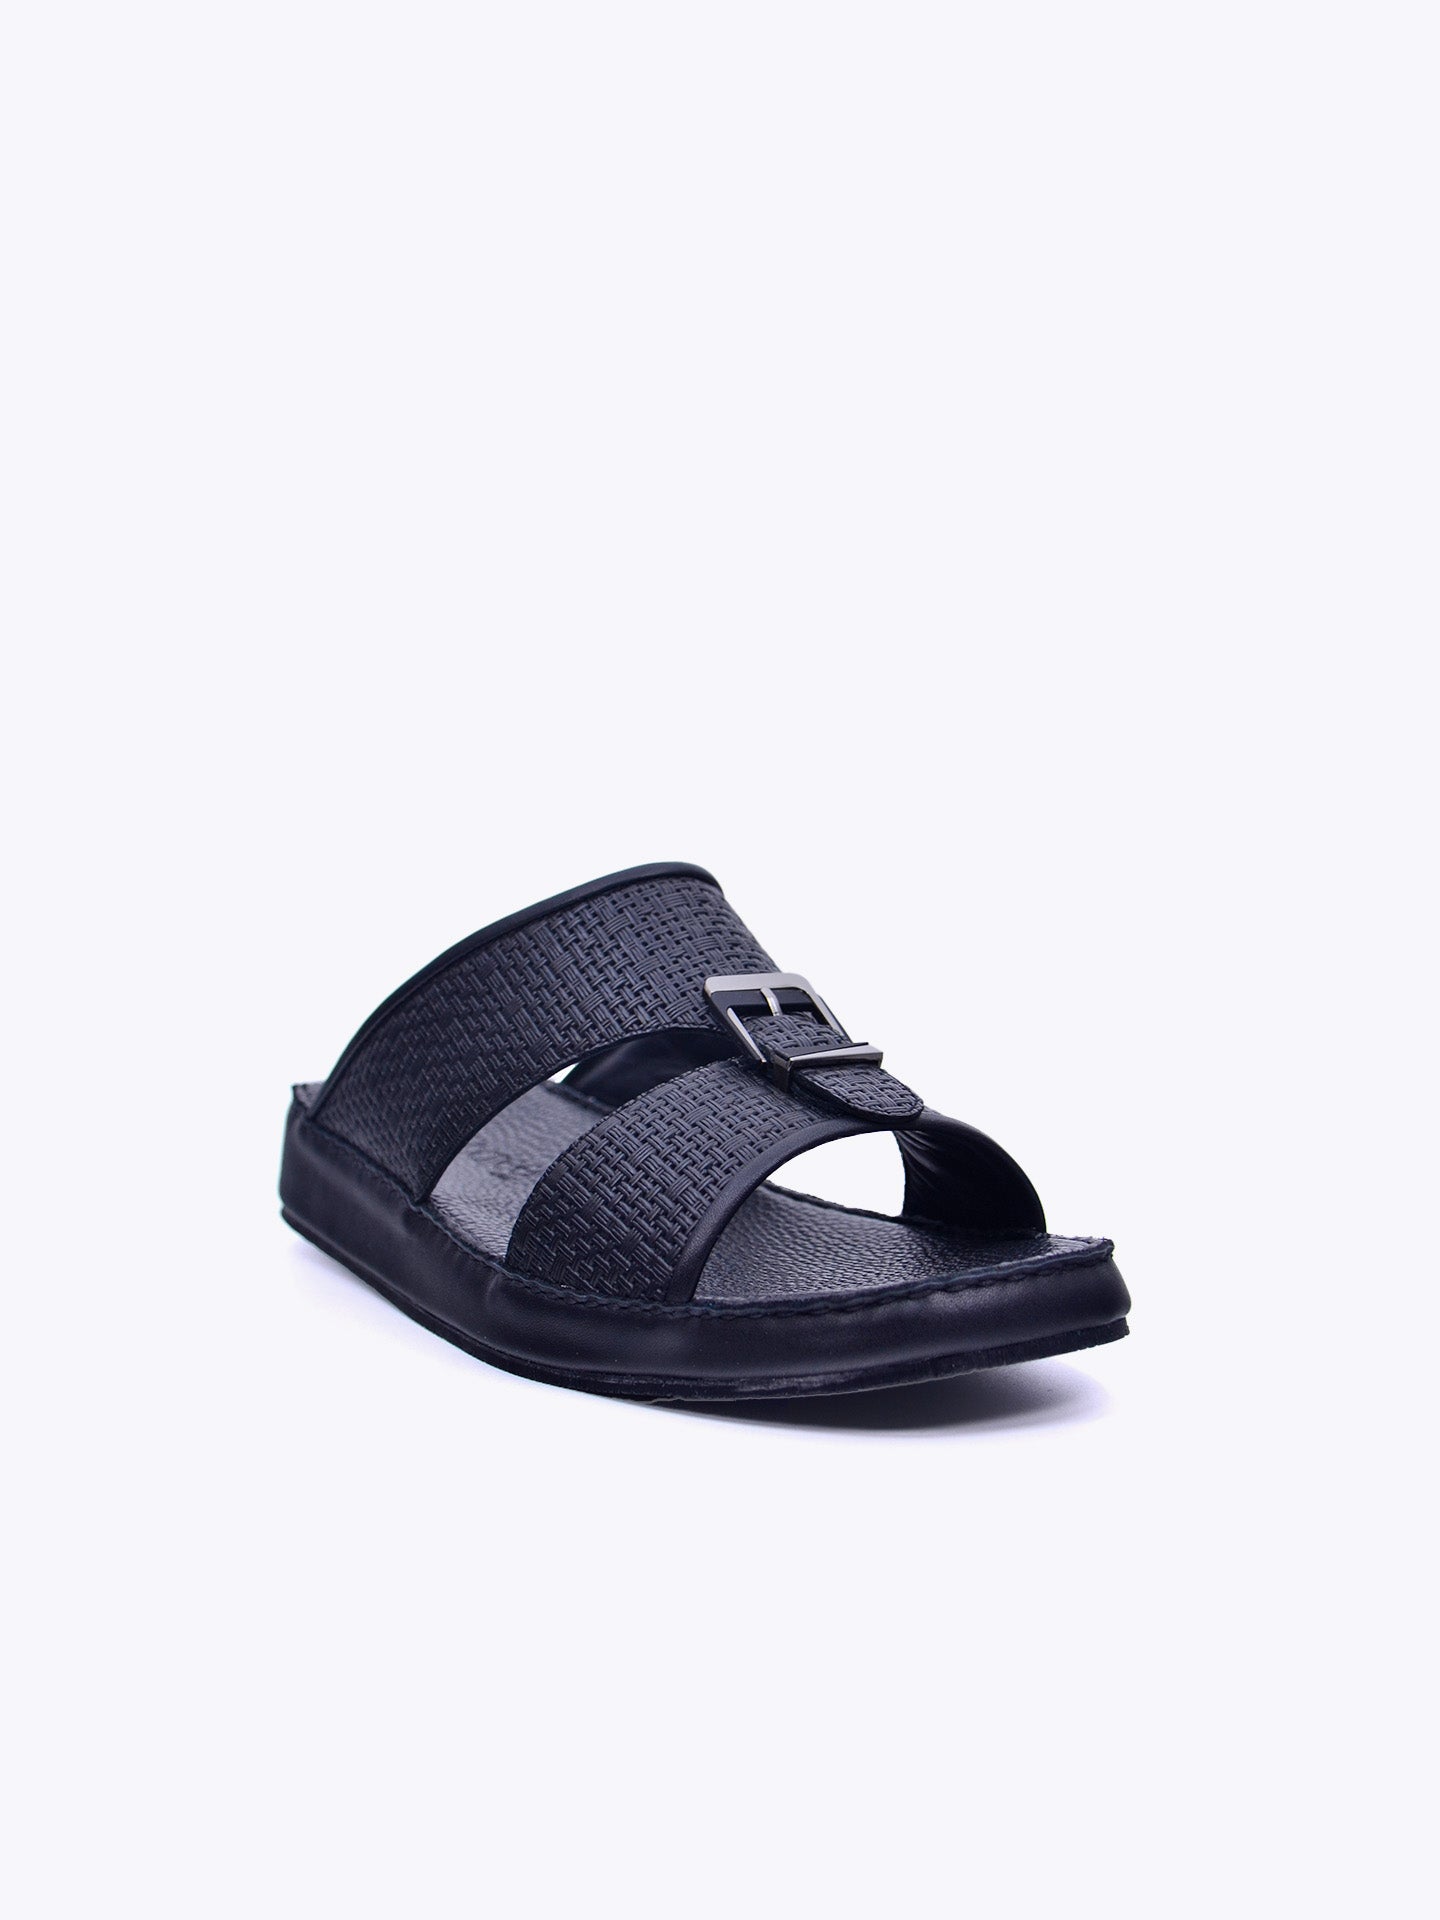 Barjeel Uno MSA-112 Men's Arabic Sandals #color_Black